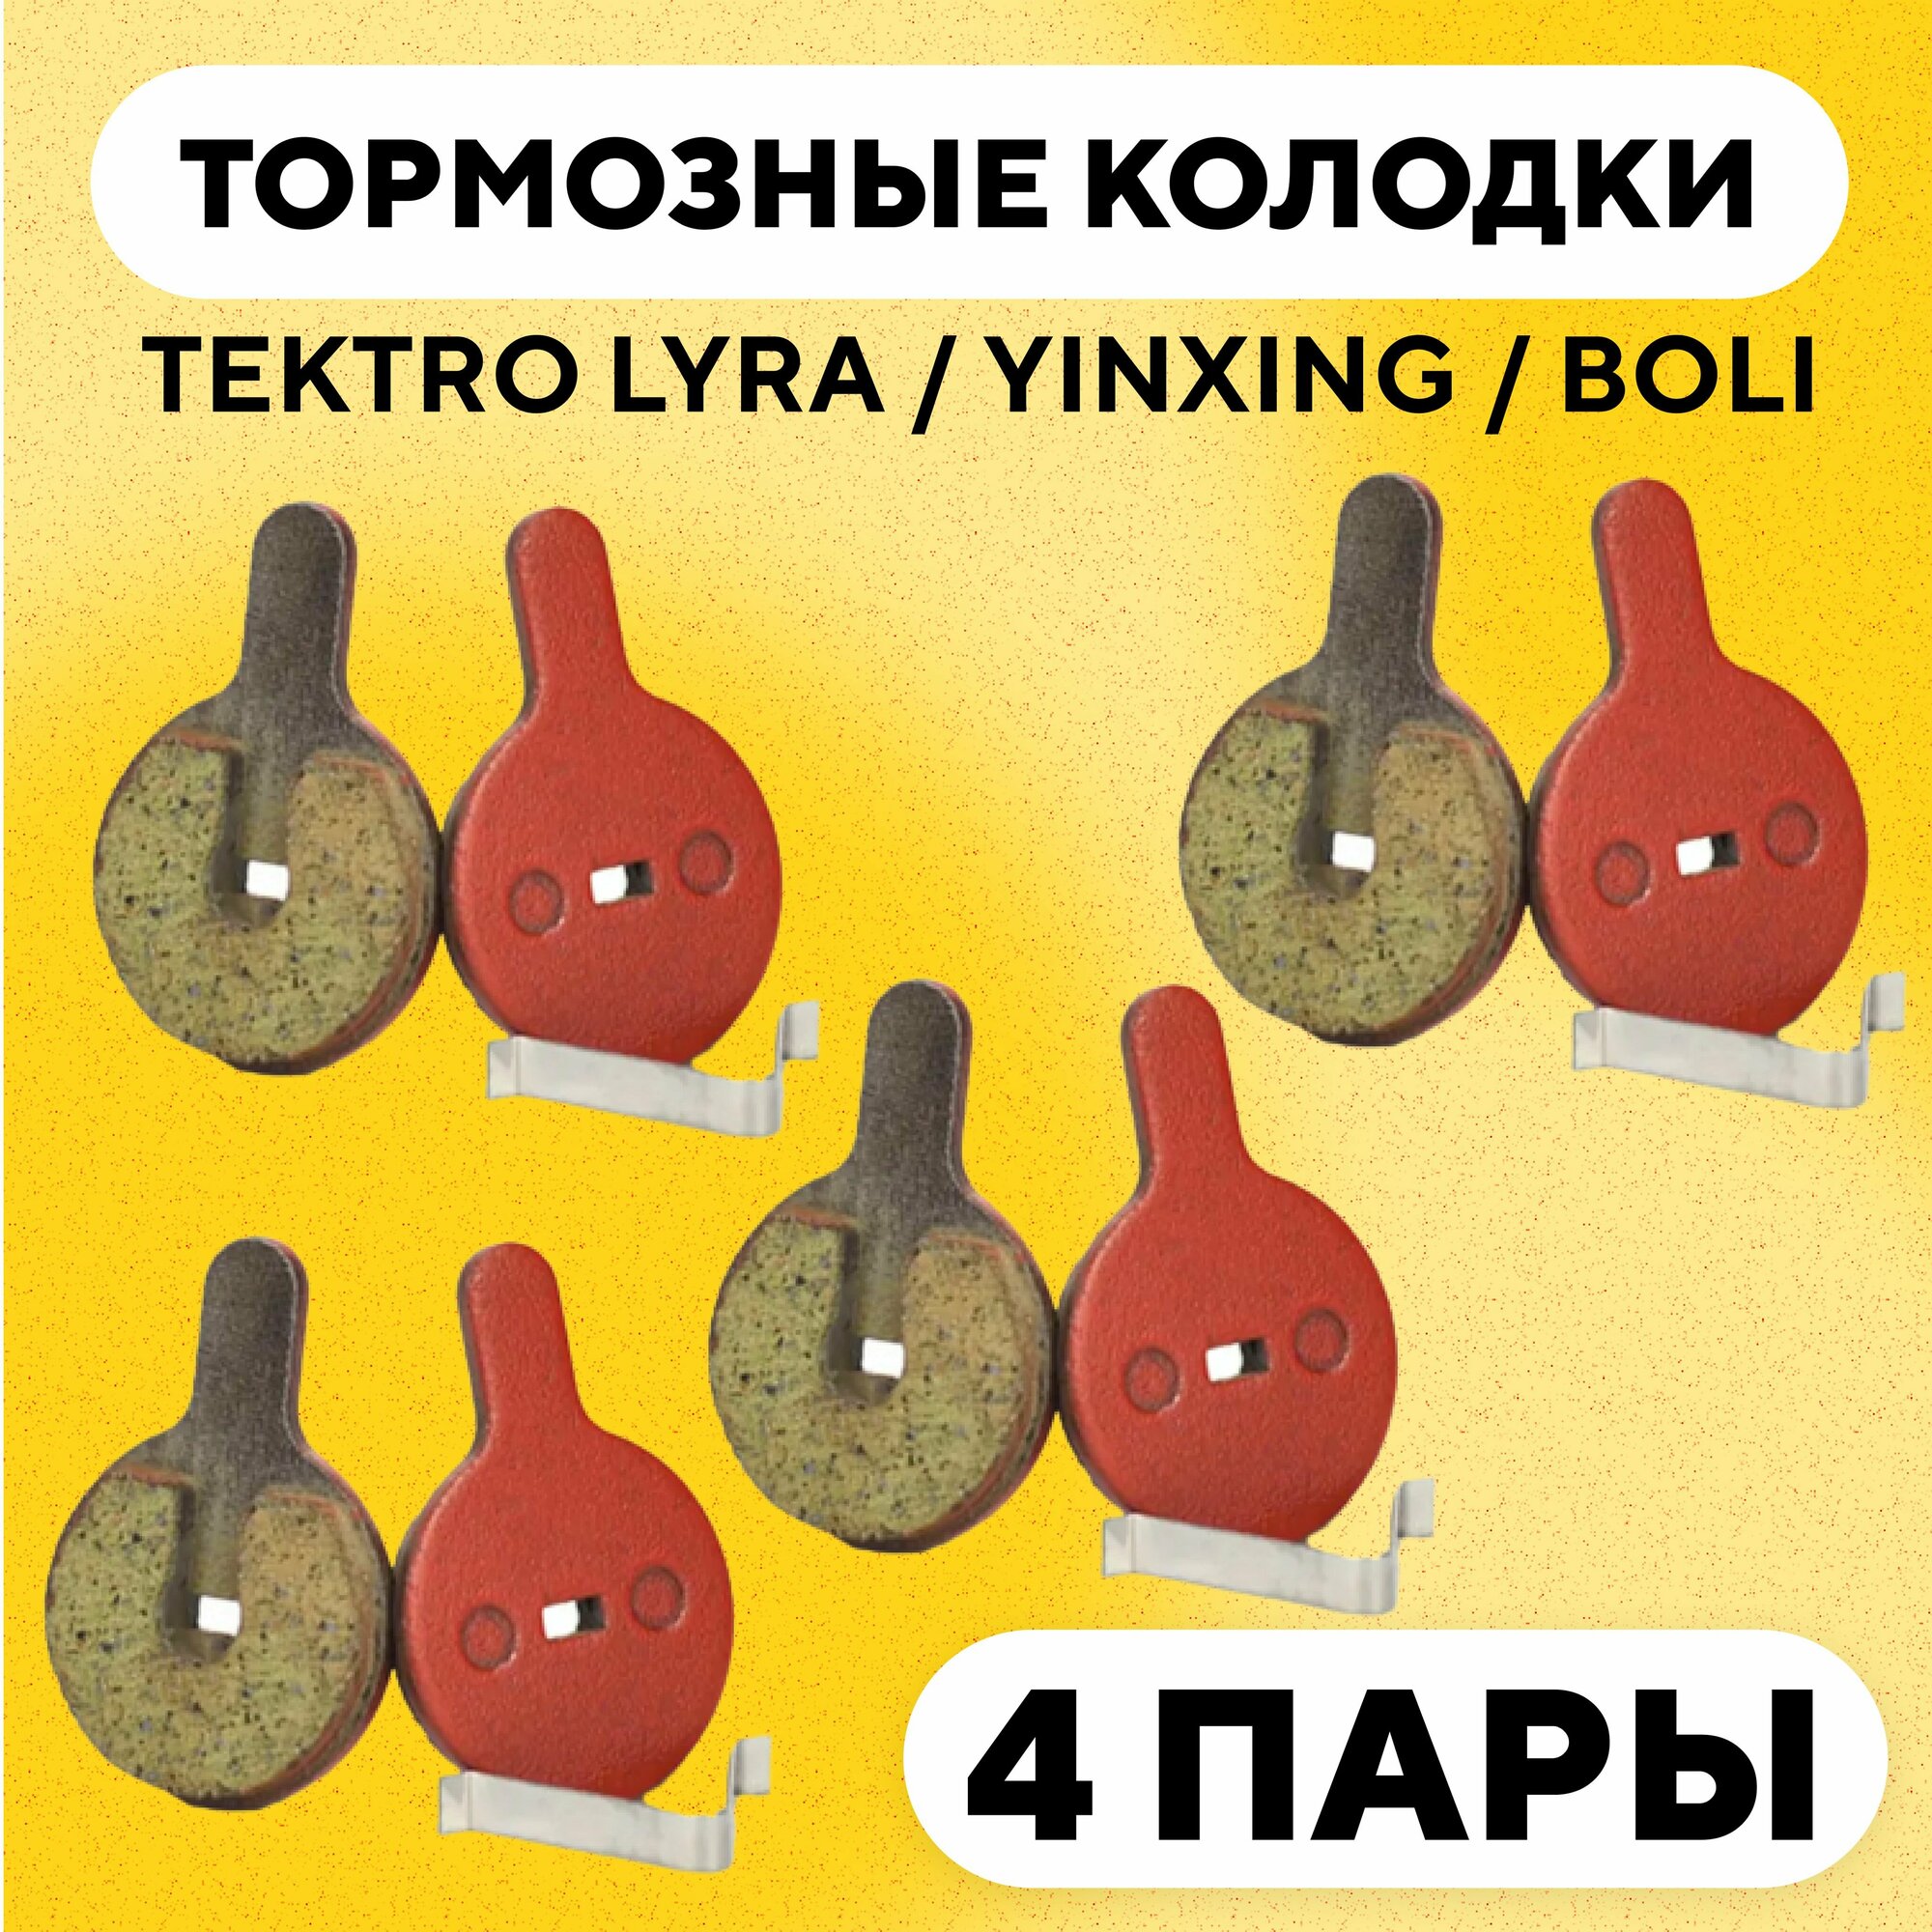 Тормозные колодки TEKTRO LYRA / YINXING / BOLI велосипеда (G-027, комплект, 4 пары)